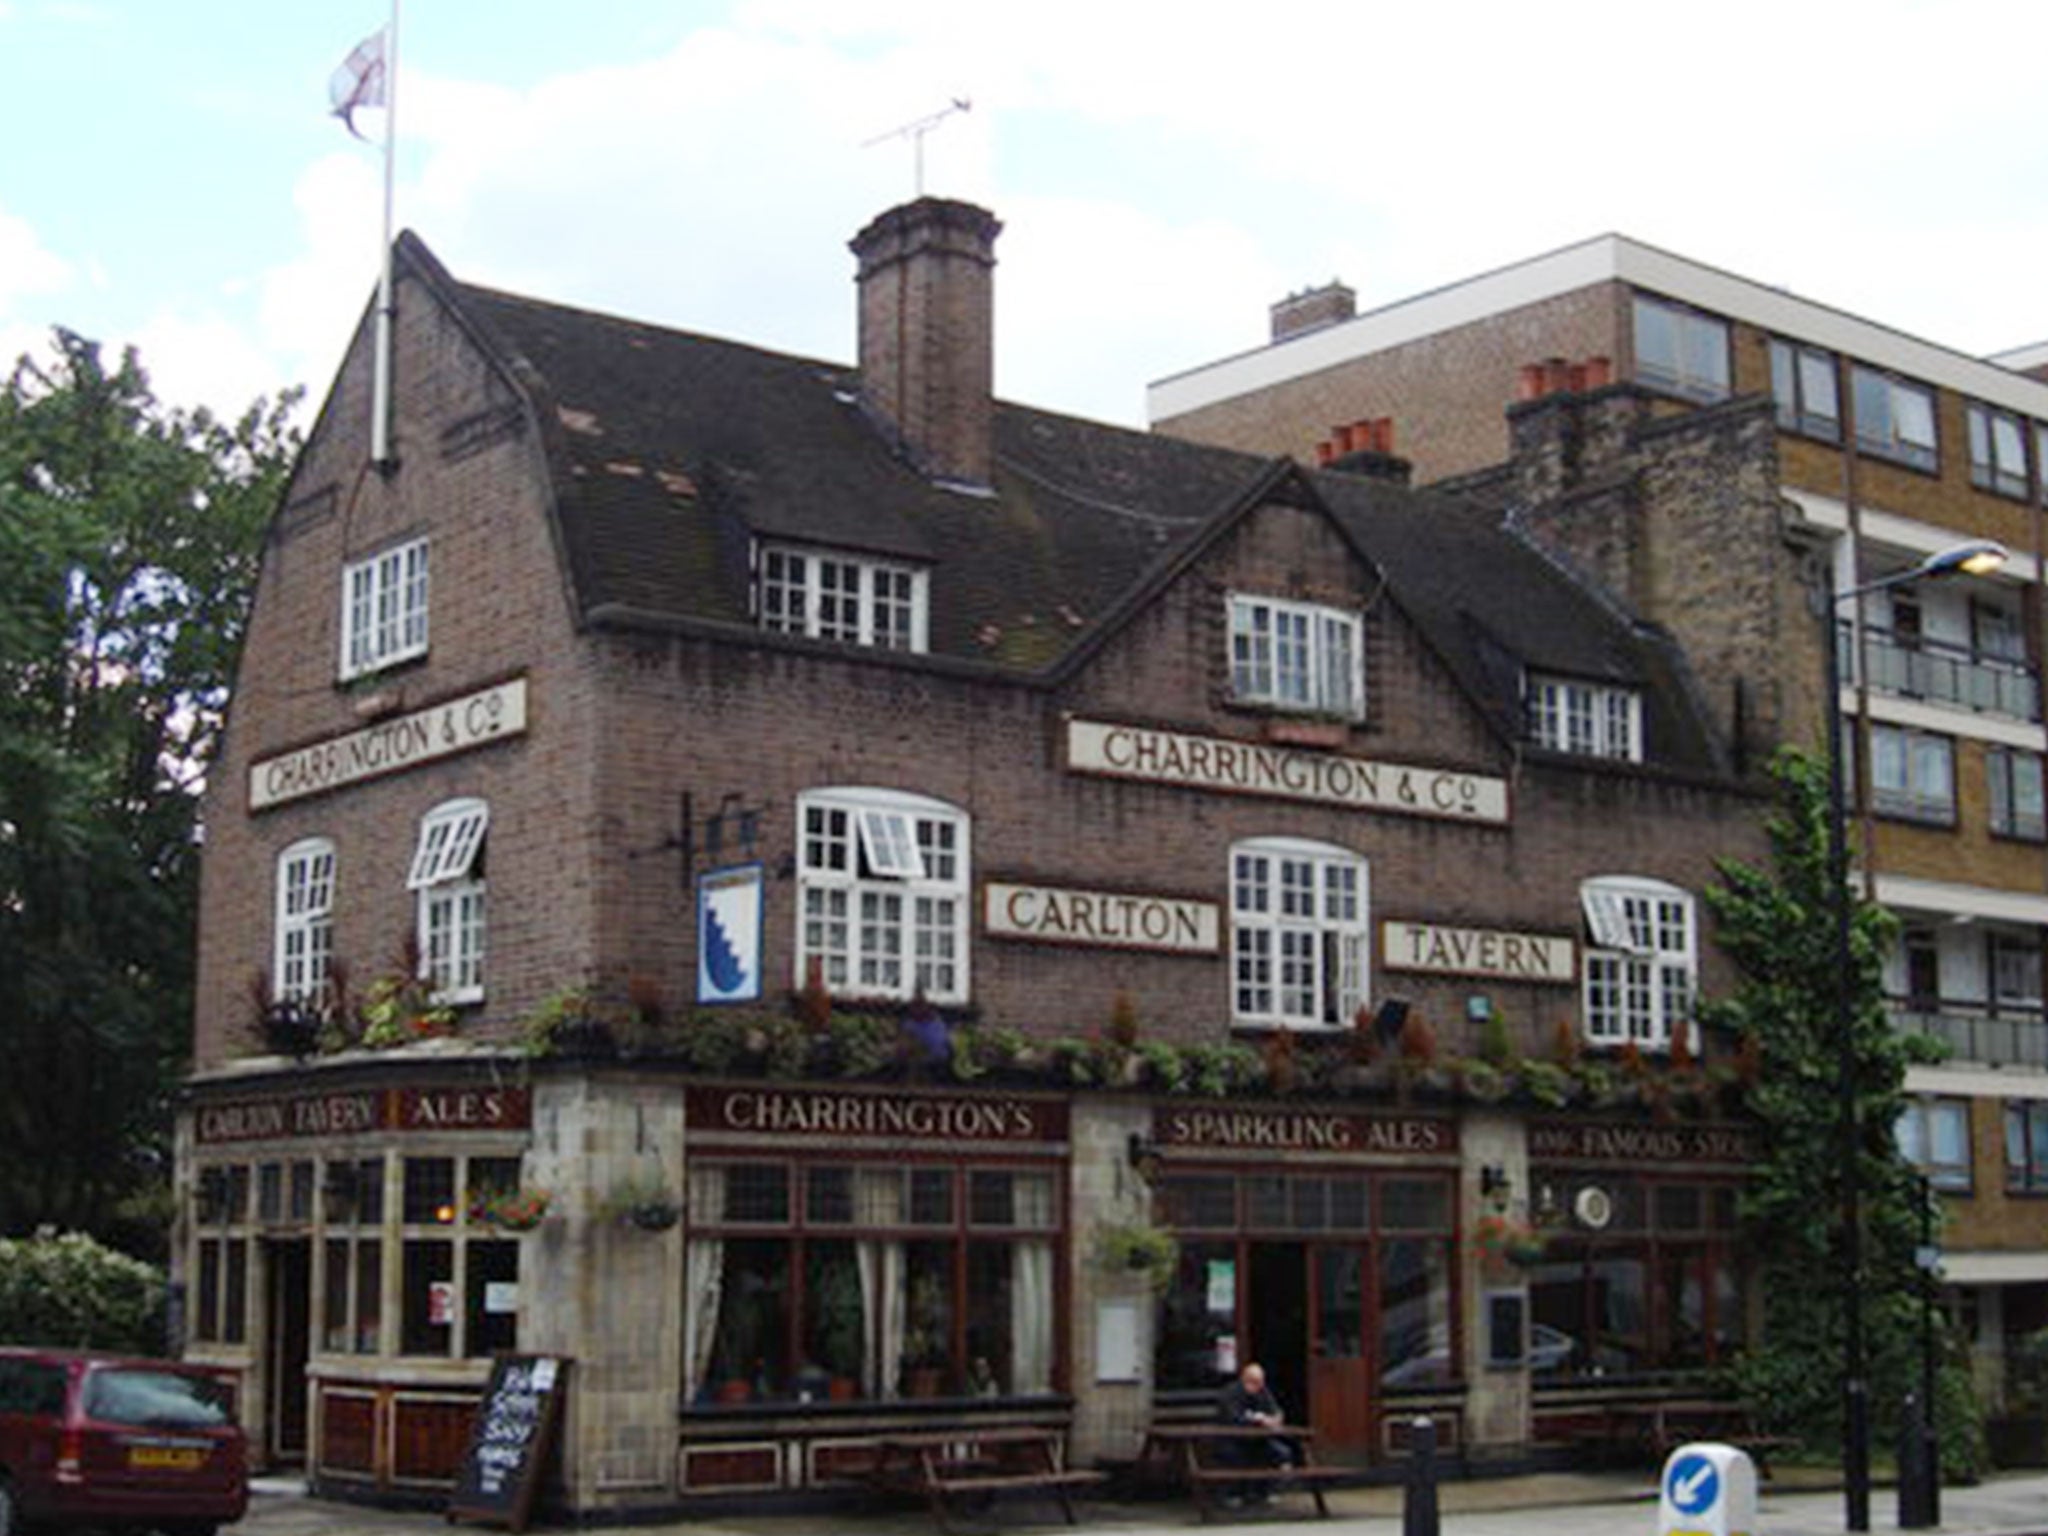 Carlton Tavern developers ordered to rebuild historic London pub brick